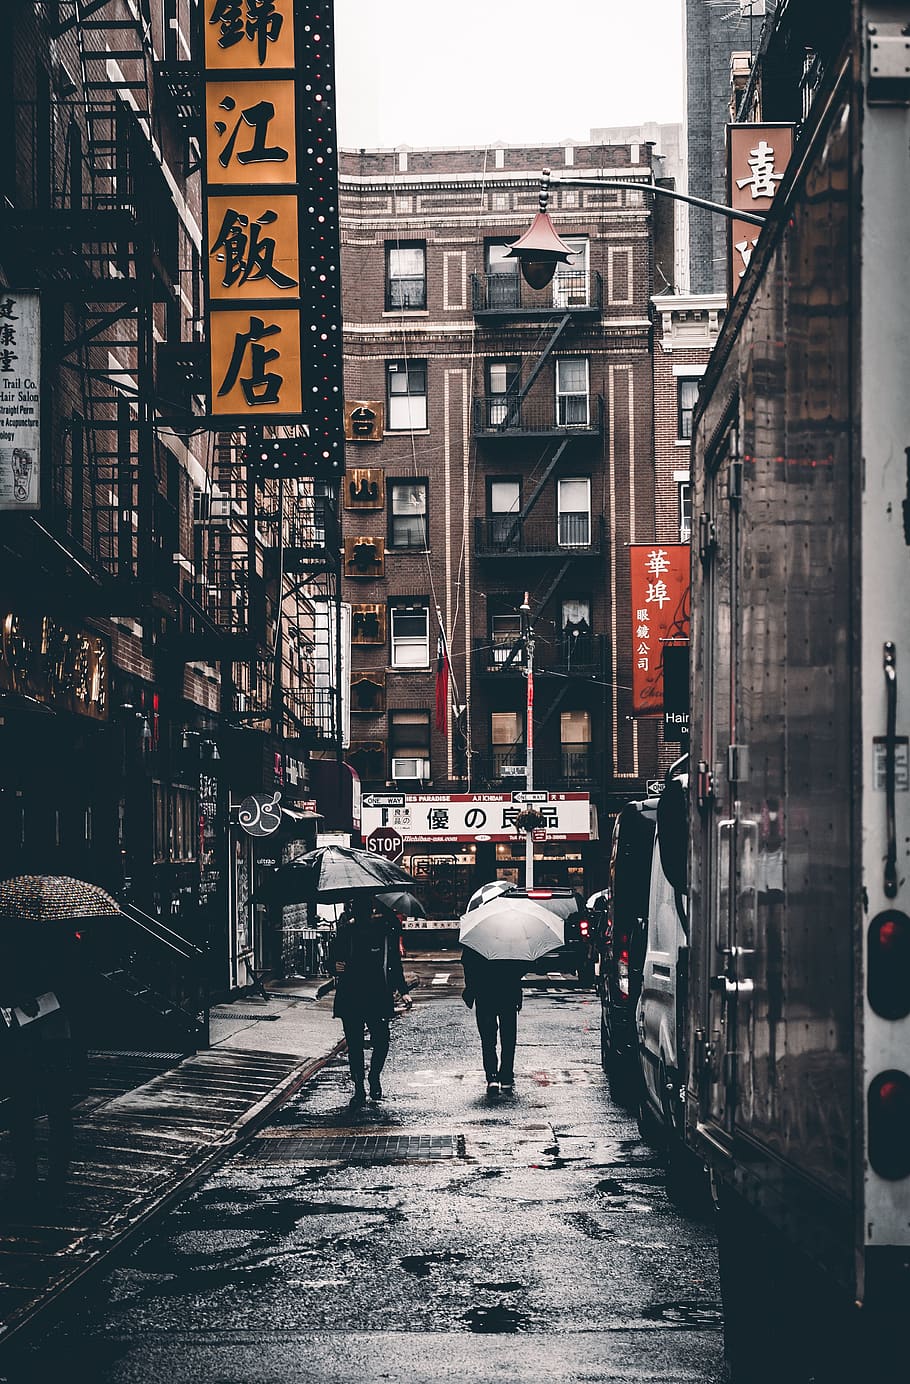 chinatown, walking, street, rain, wet, urban, alley, buildings, architecture, people